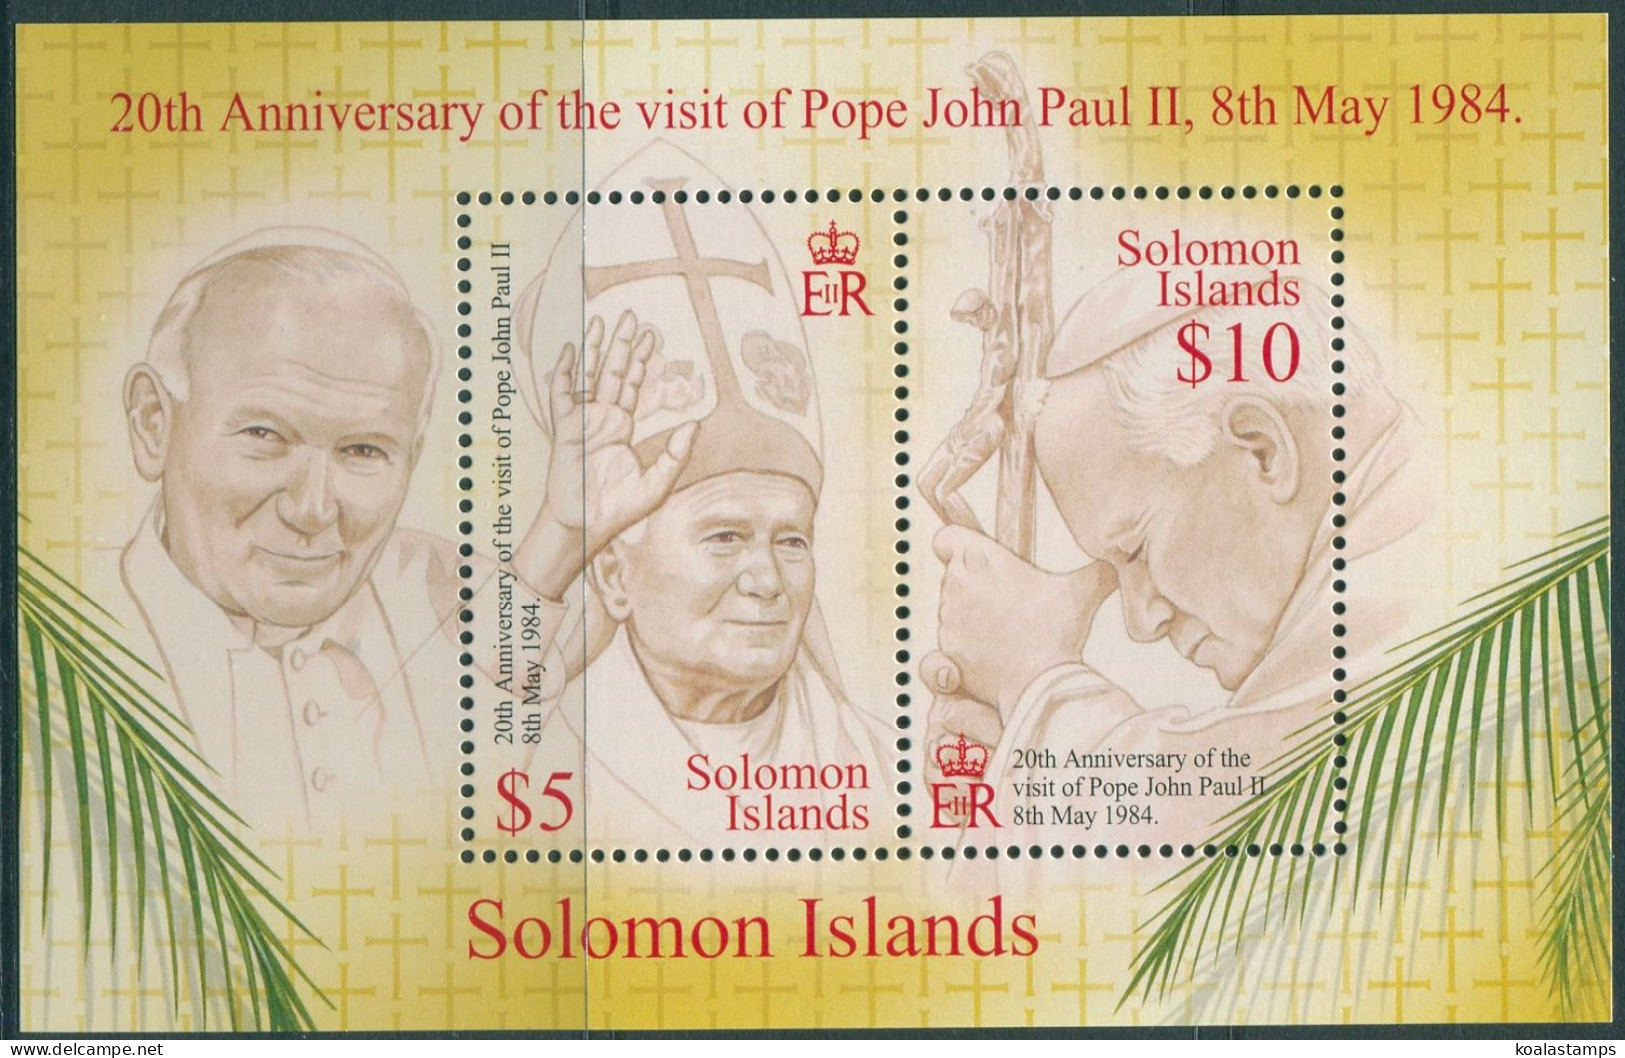 Solomon Islands 2005 SG1152 Pope John Paul In Memory MS MNH - Solomoneilanden (1978-...)